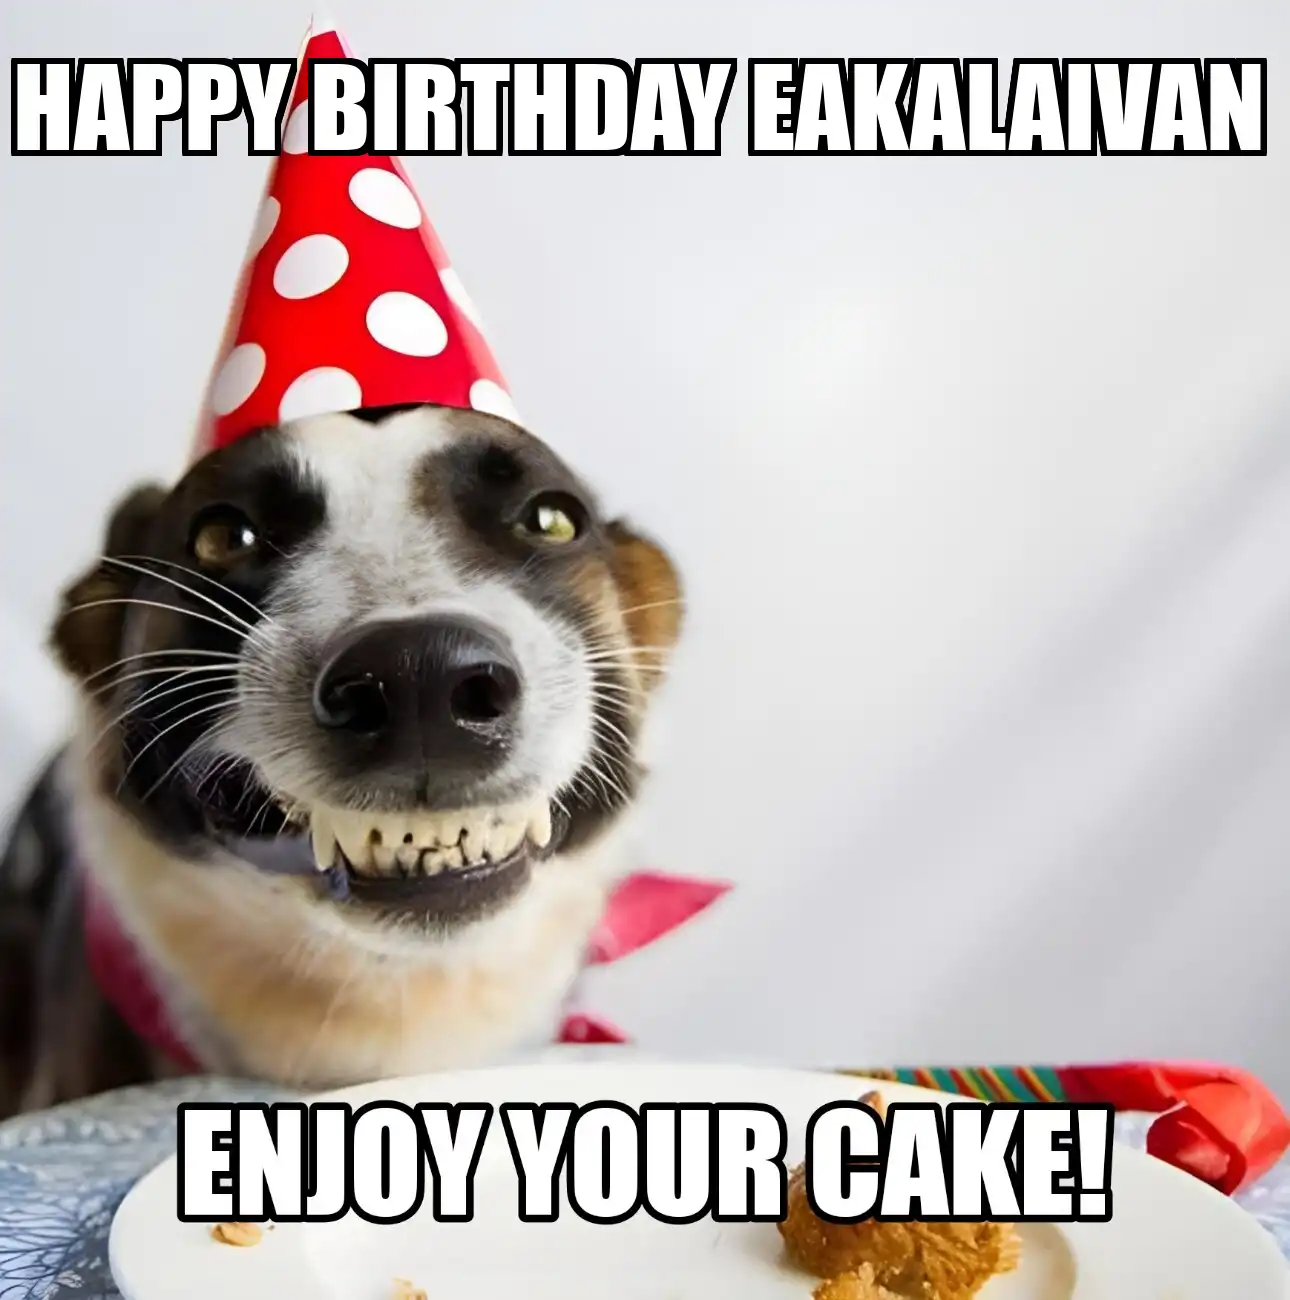 Happy Birthday Eakalaivan Enjoy Your Cake Dog Meme